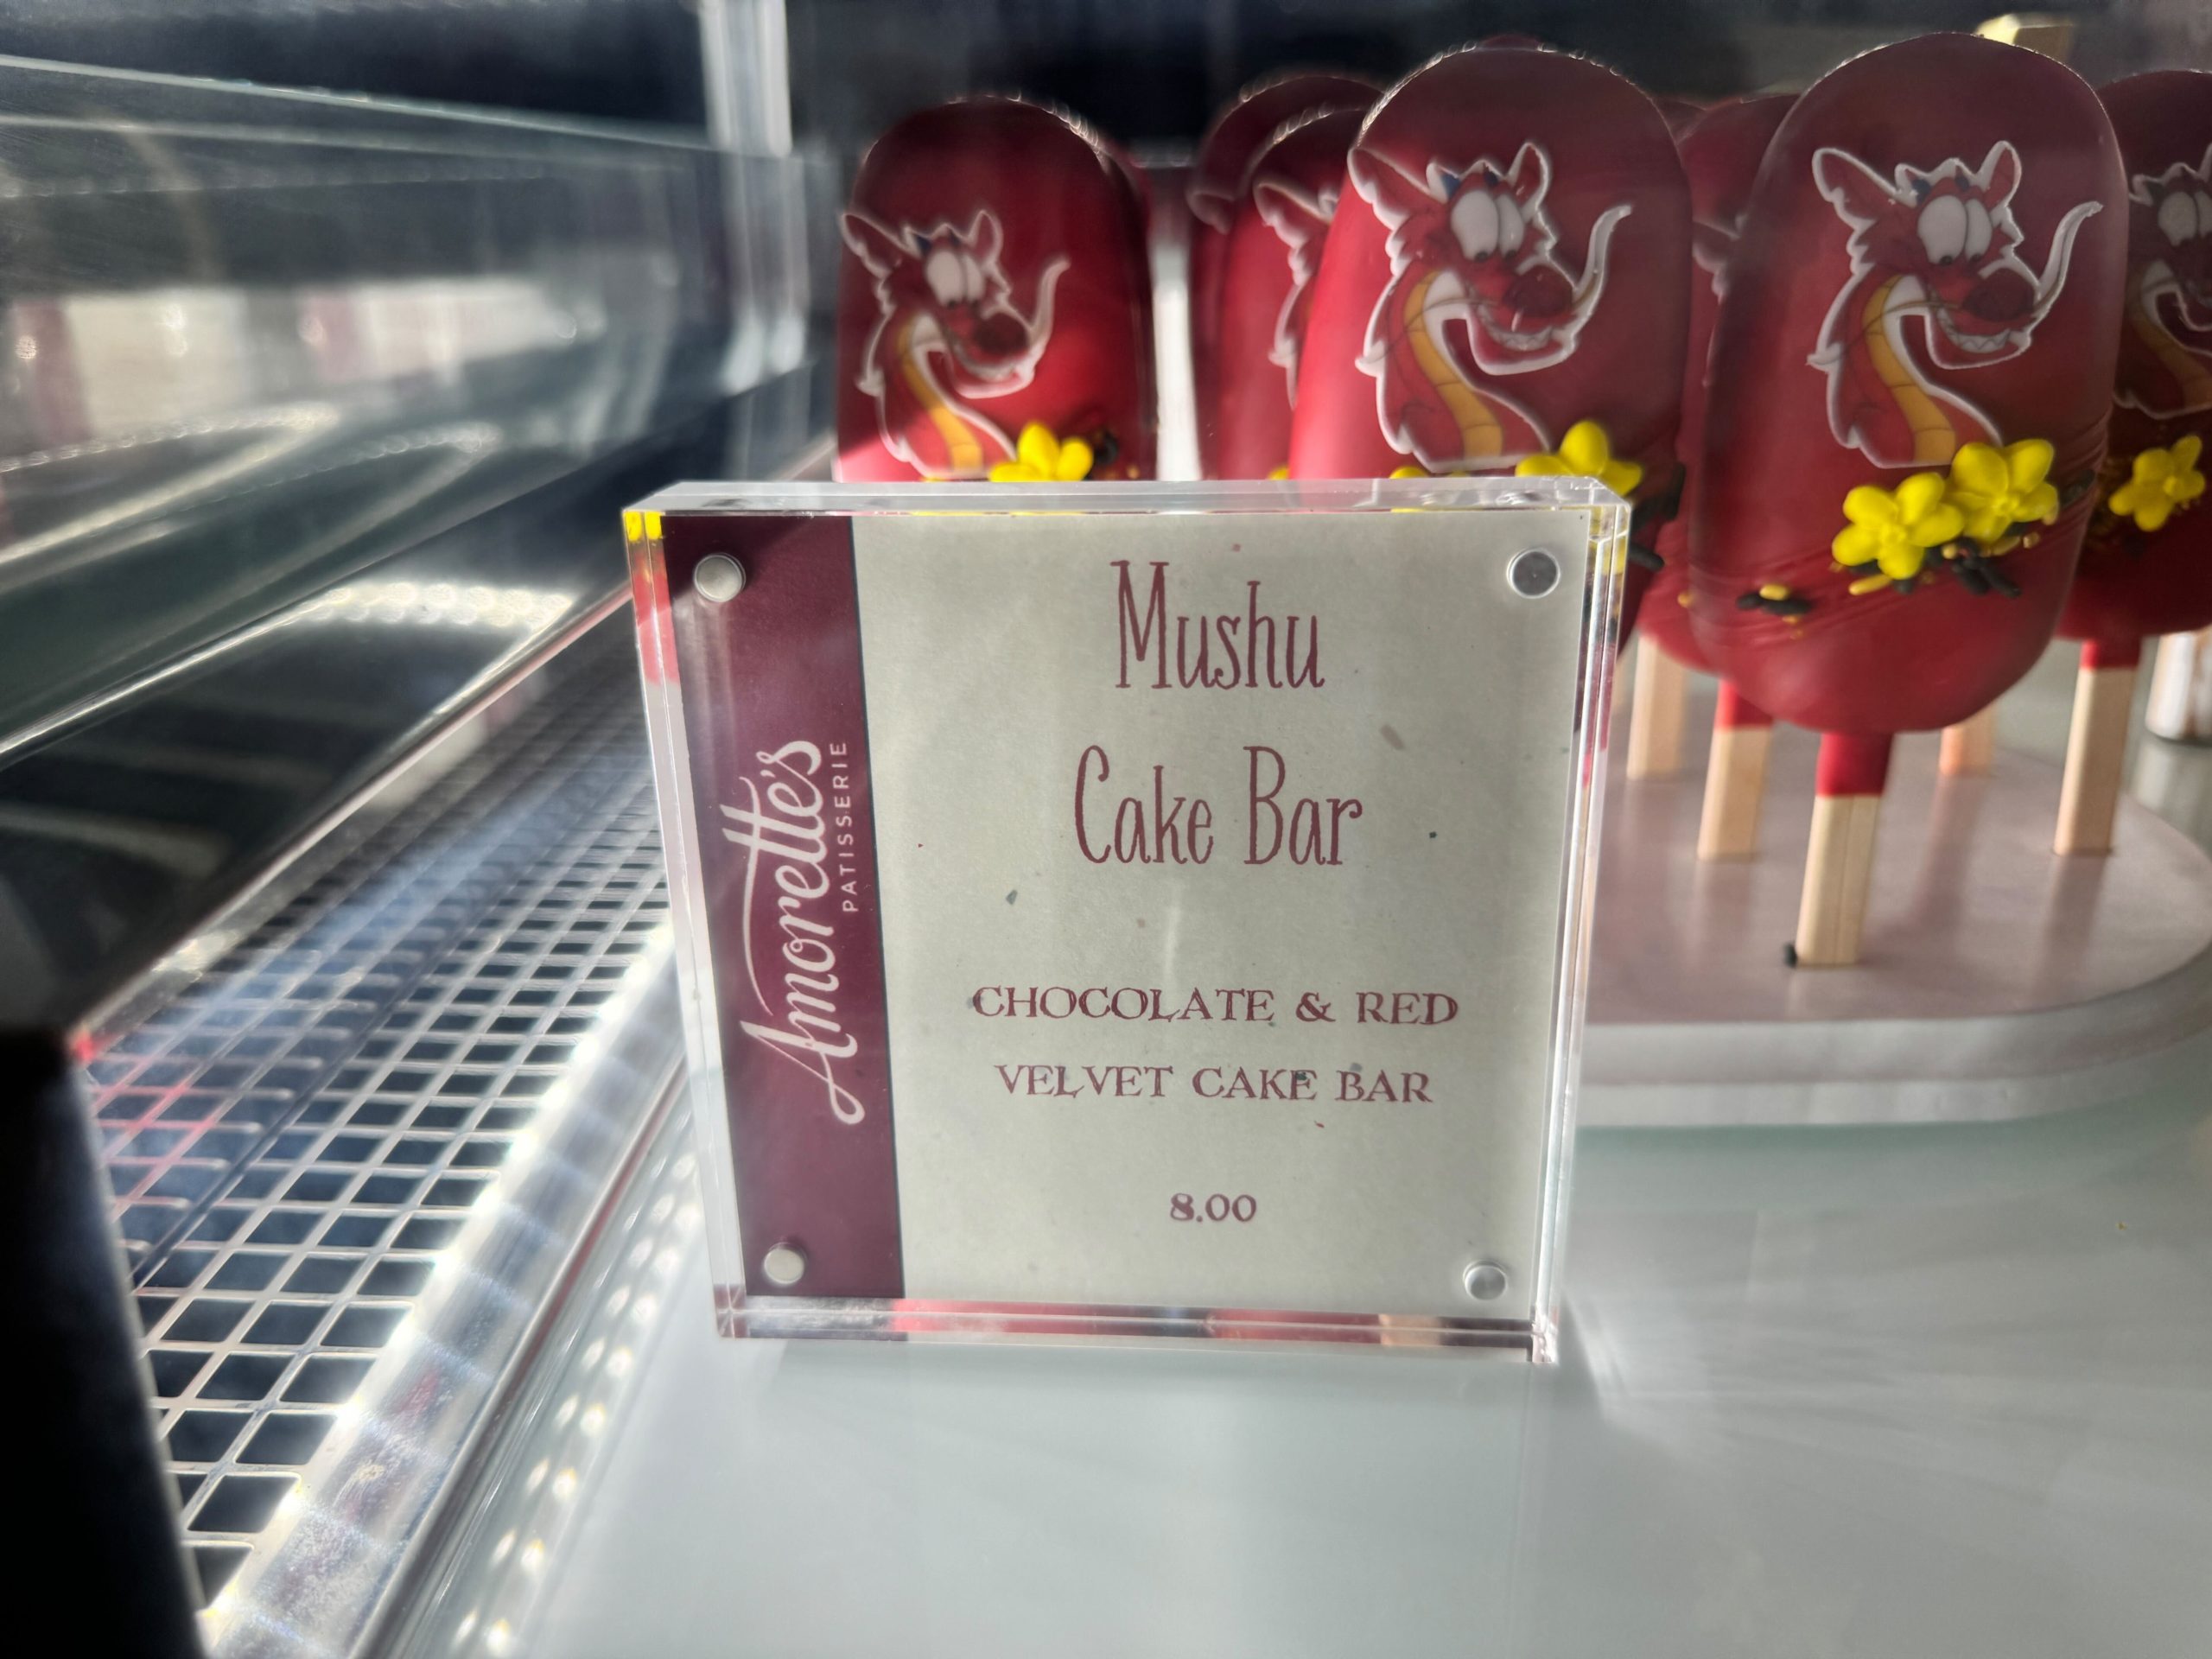 Mushu Cake Bar